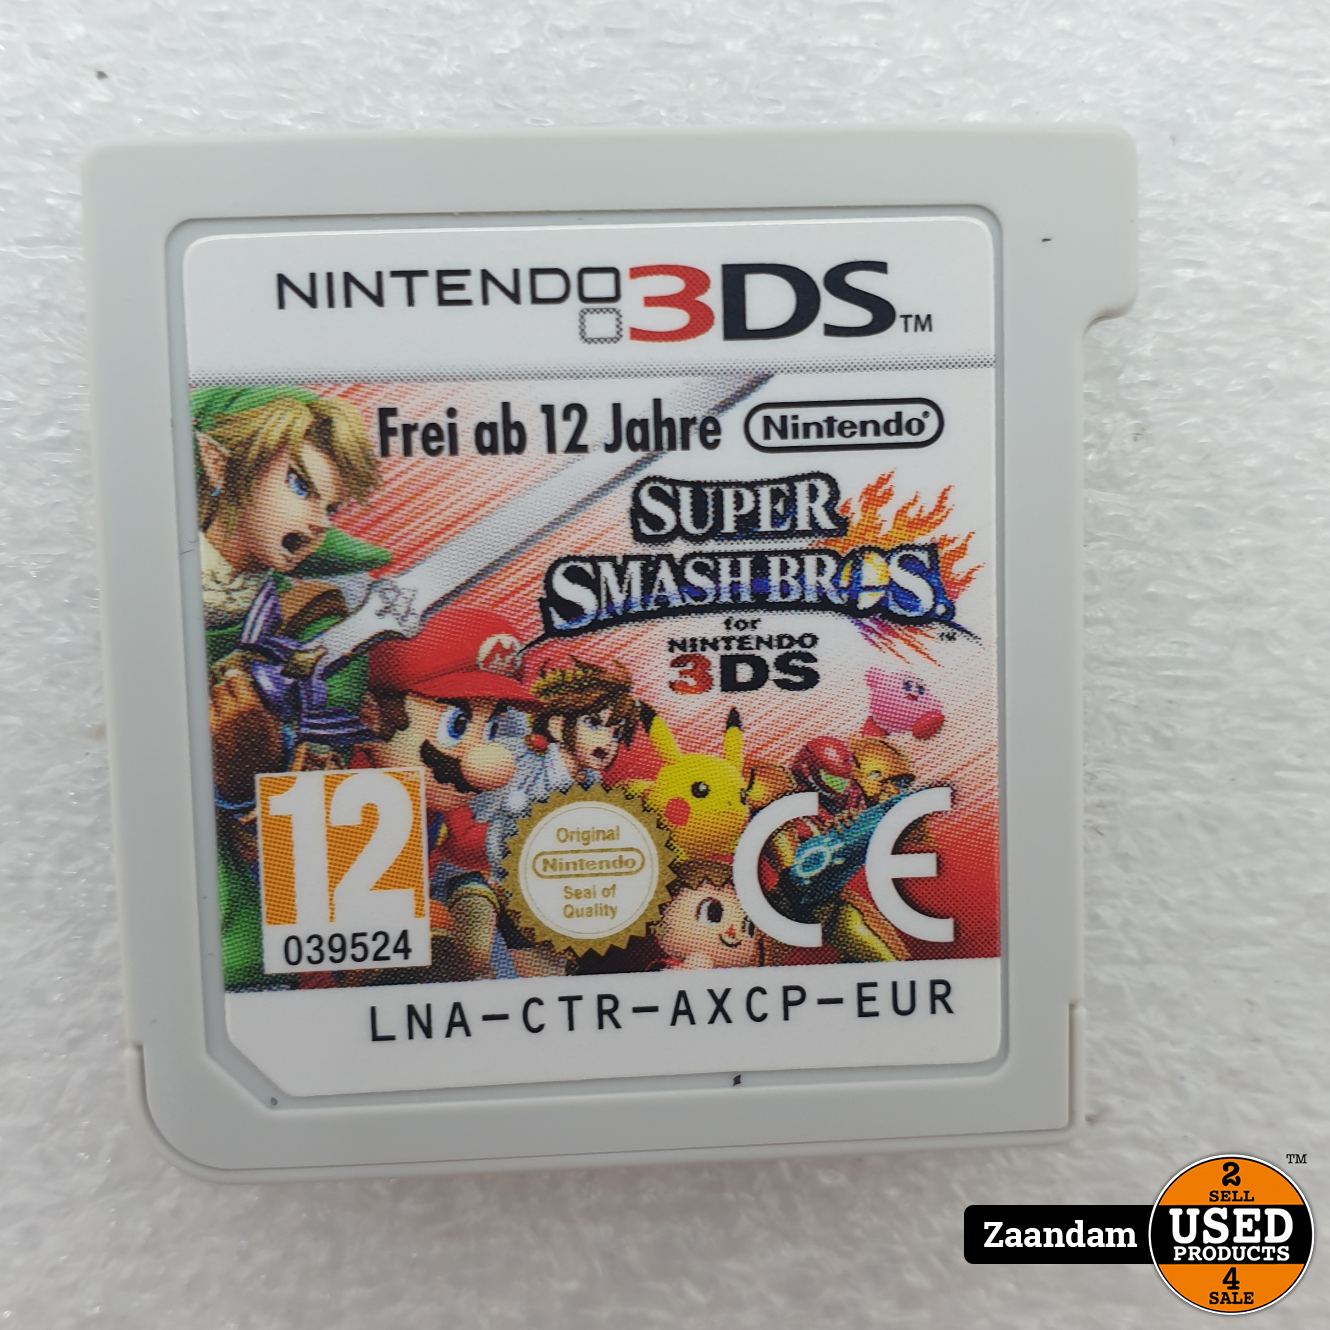 Nintendo 3DS Game: Super Smash Bros Used Products Zaandam